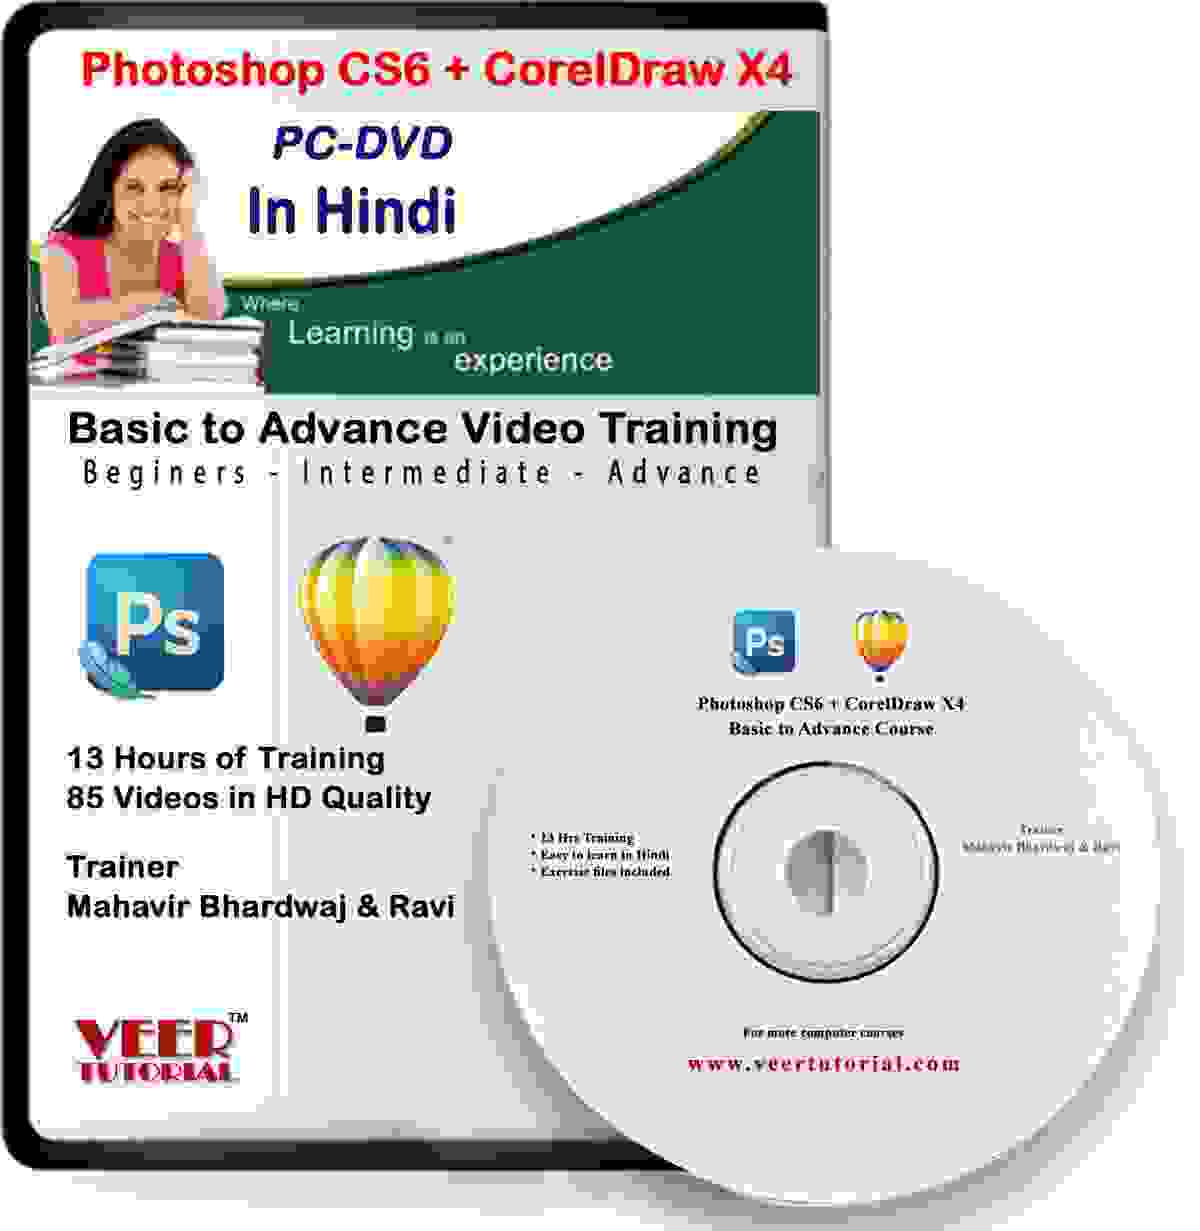 Corel+photoshop Tutorial Dvd | Photoshop Coreldraw Tutorials DVD Price 30 Sep 2022 Photoshop Tutorial Hindi Dvd online shop - HelpingIndia